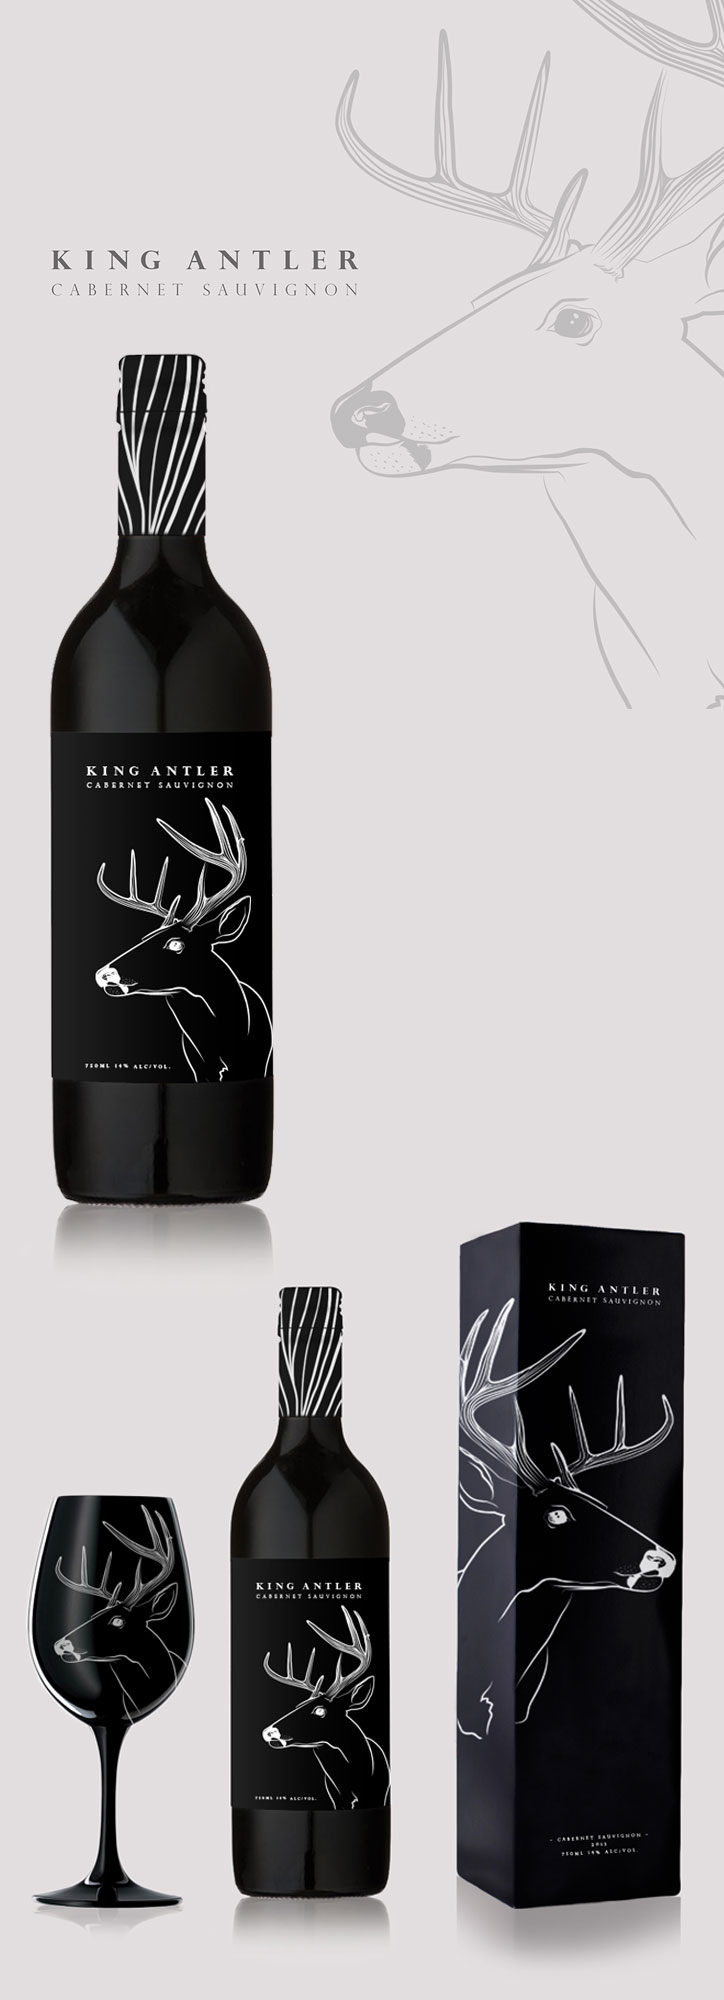 richardson-jenny-king-antler-wine-packaging.jpg